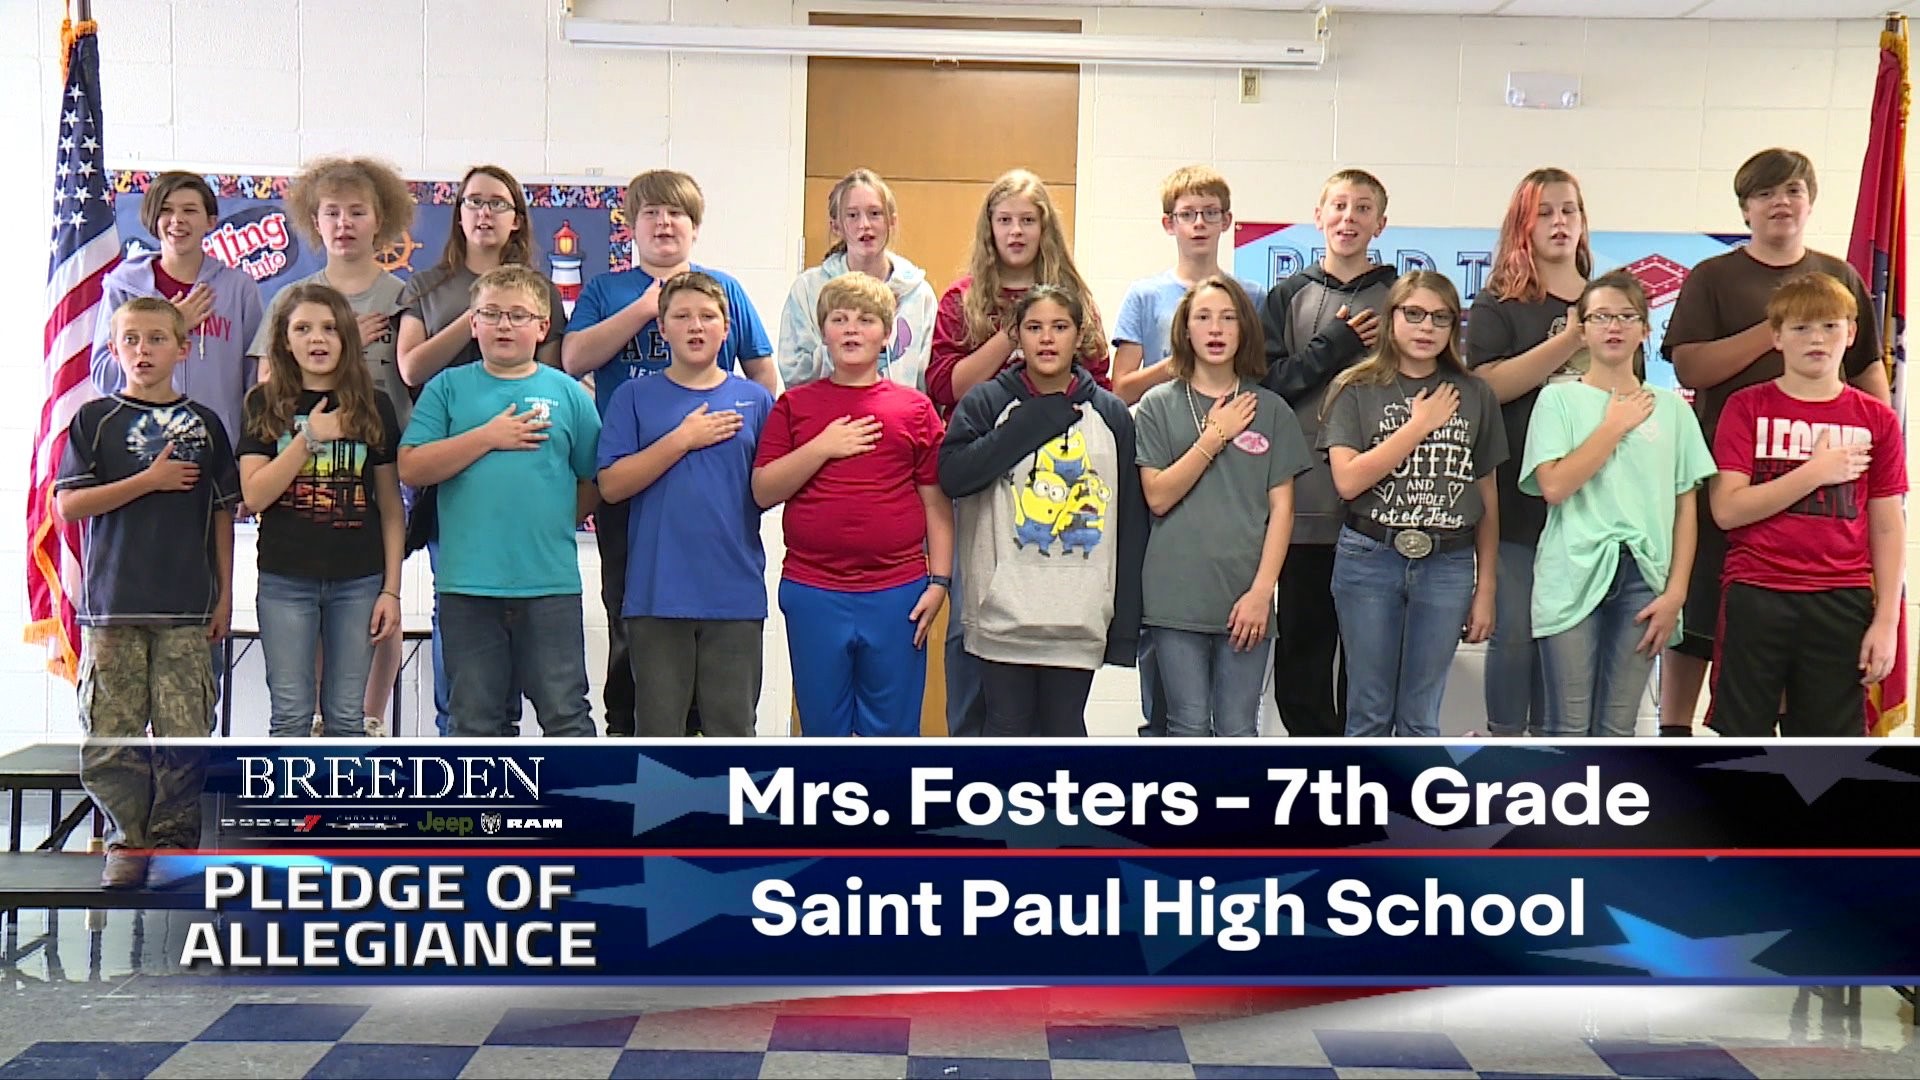 Mrs. Fosters 7th Grade Saint Paul High School